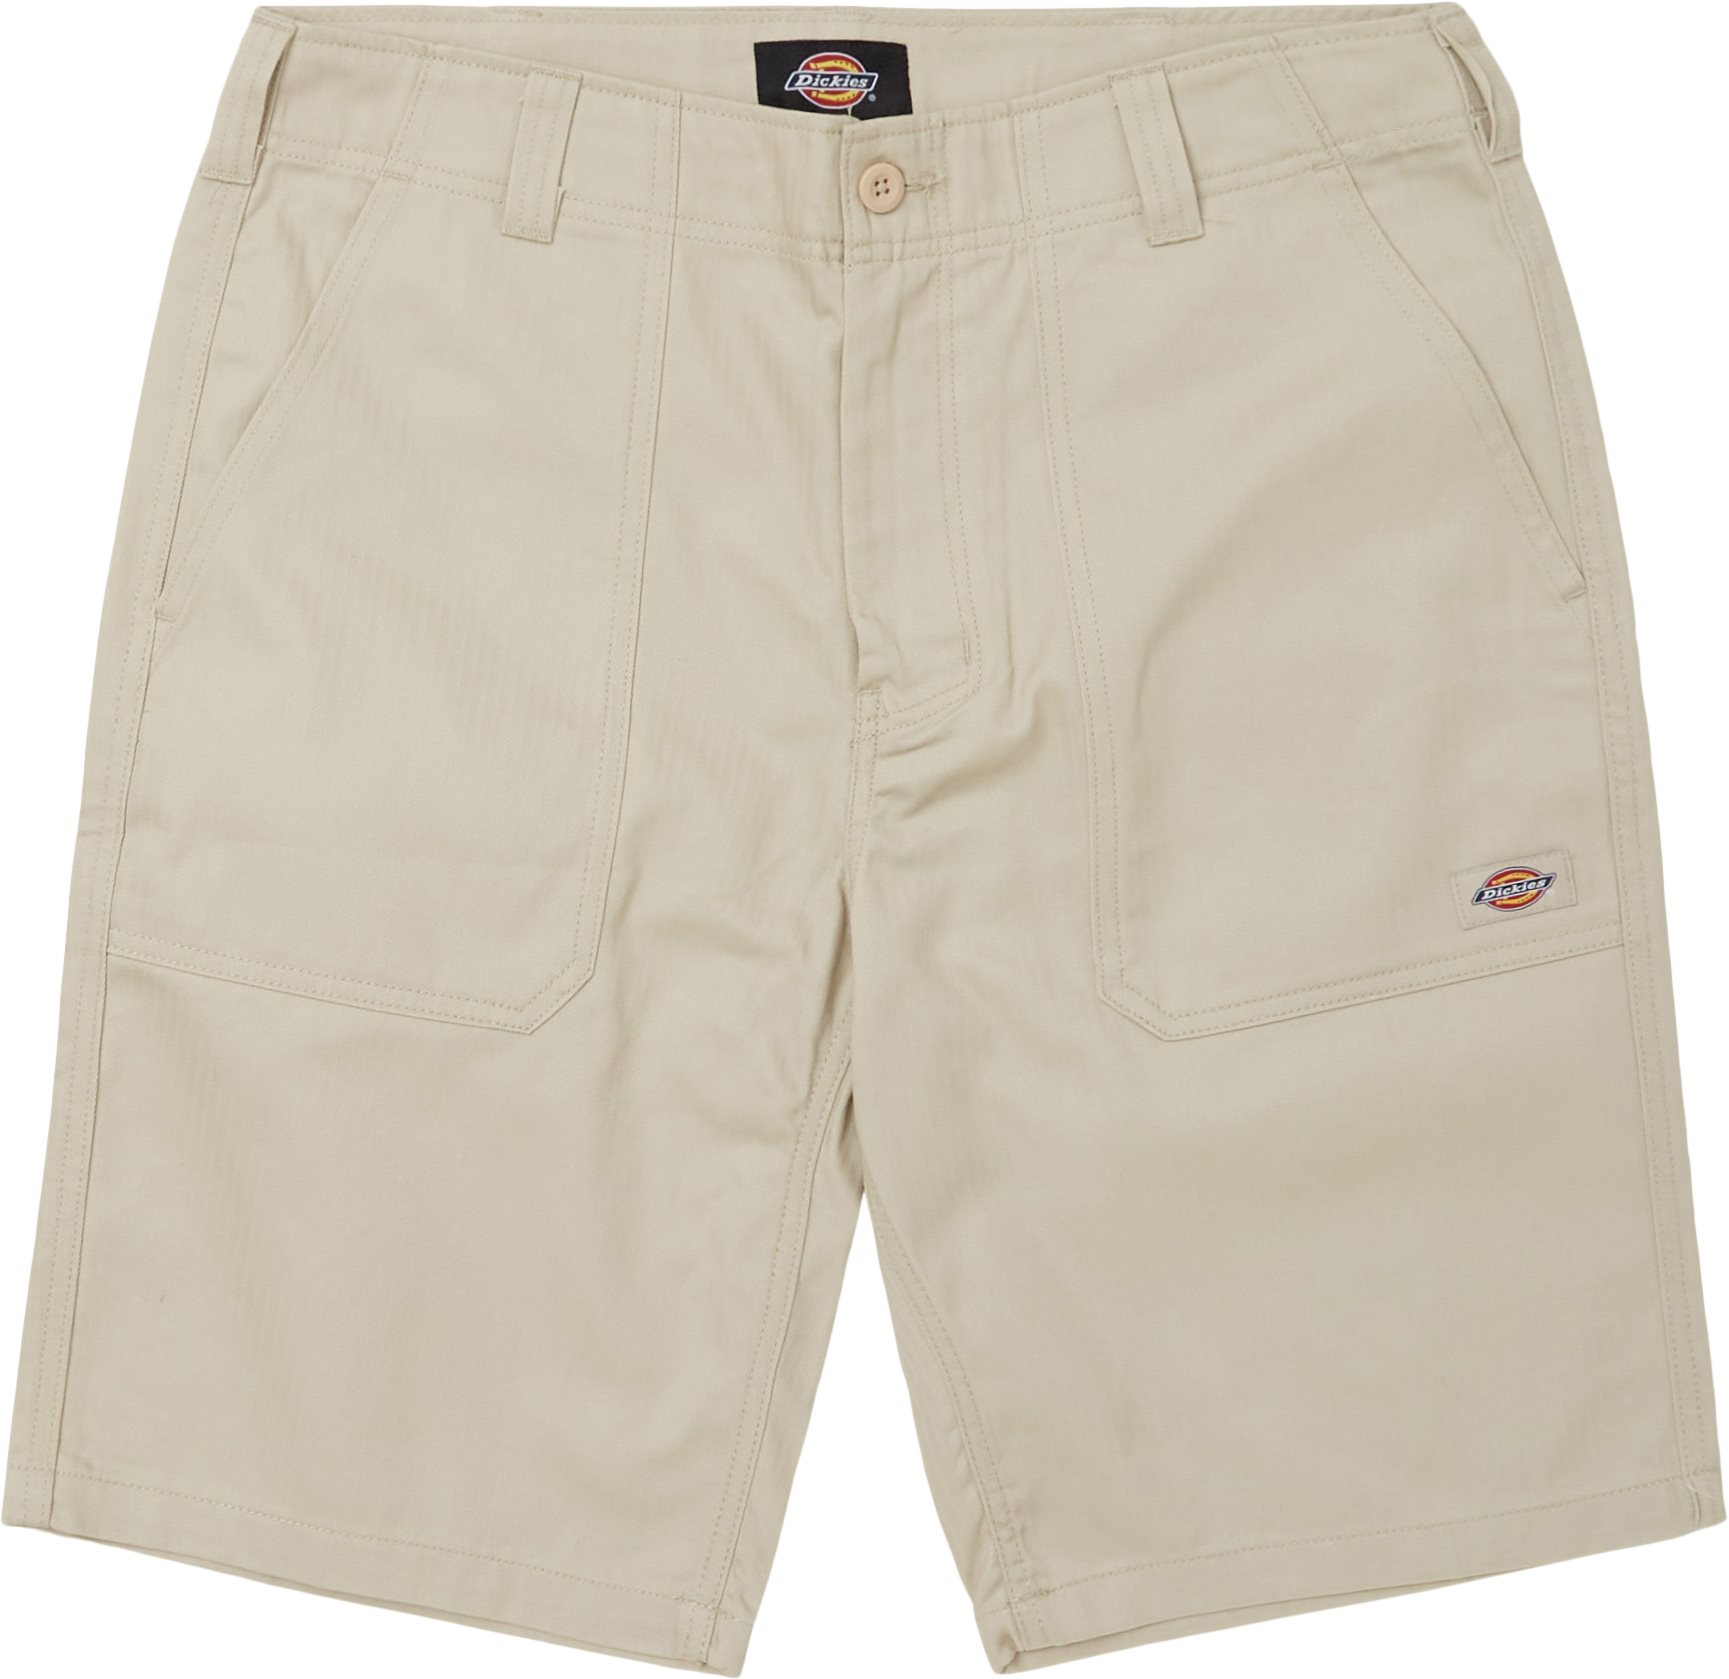 Funkley Shorts - Shorts - Regular fit - Sand